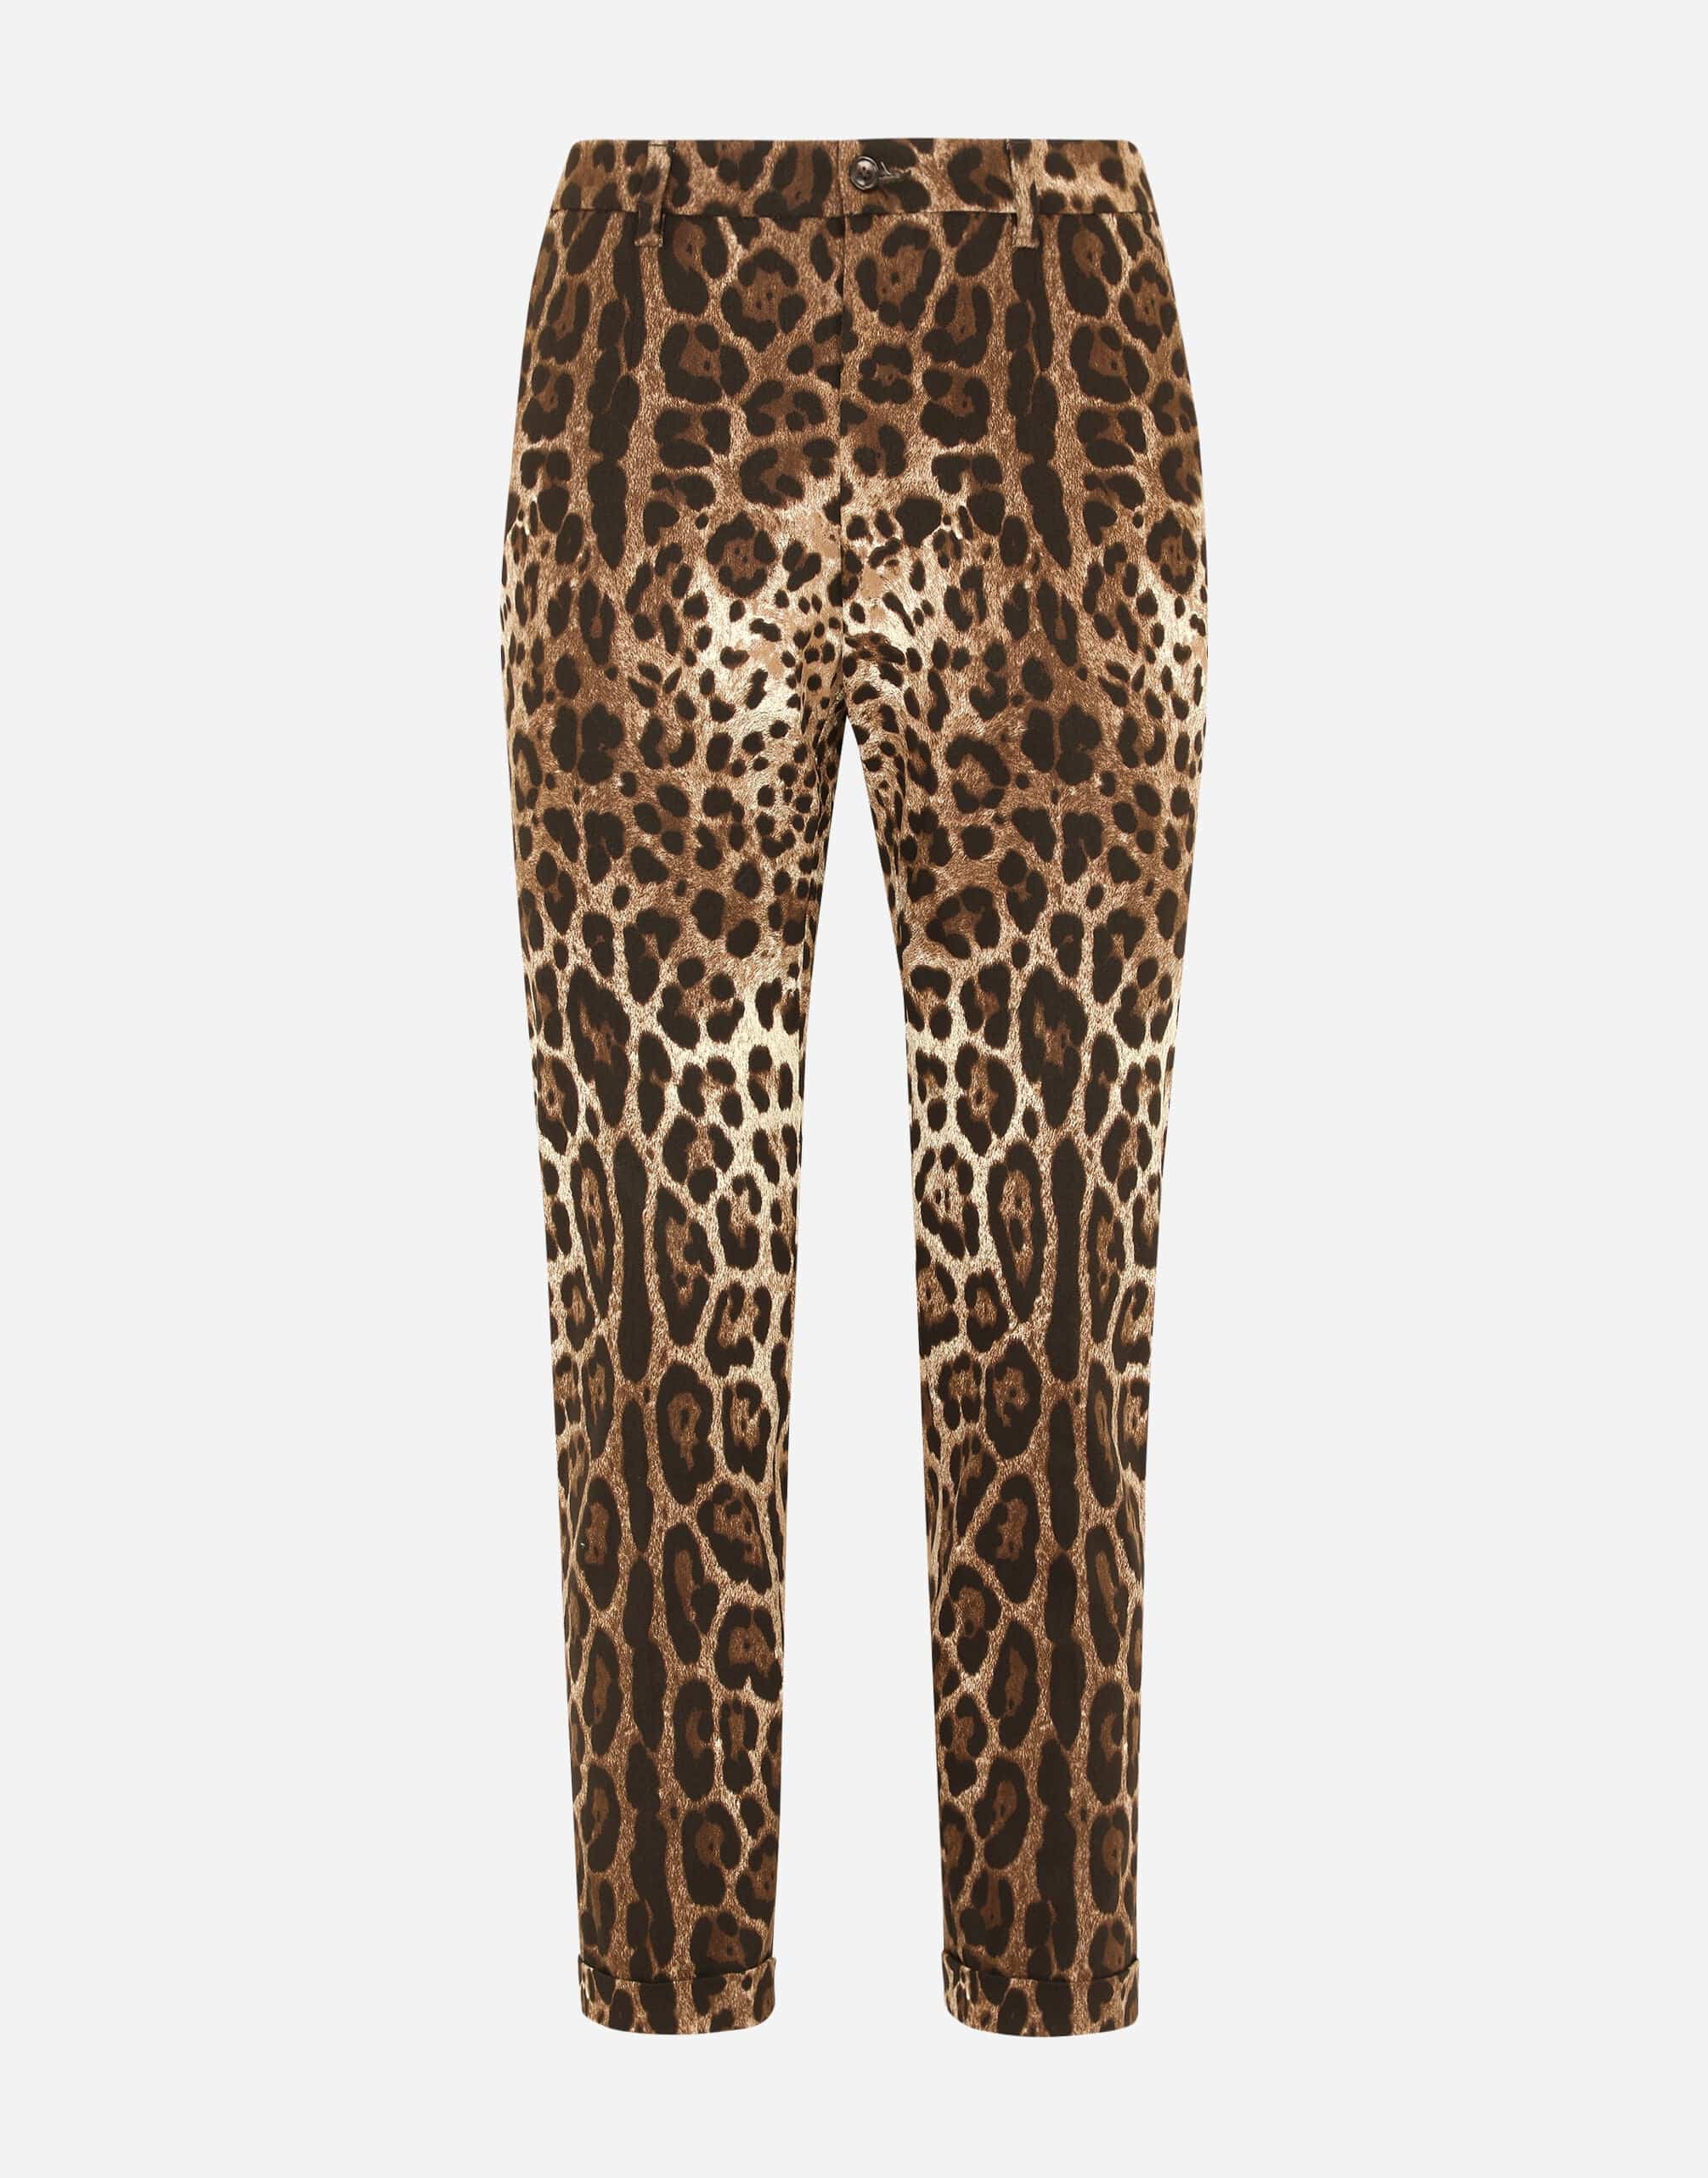 Dolce & Gabbana Leopard Printed Cotton Pants